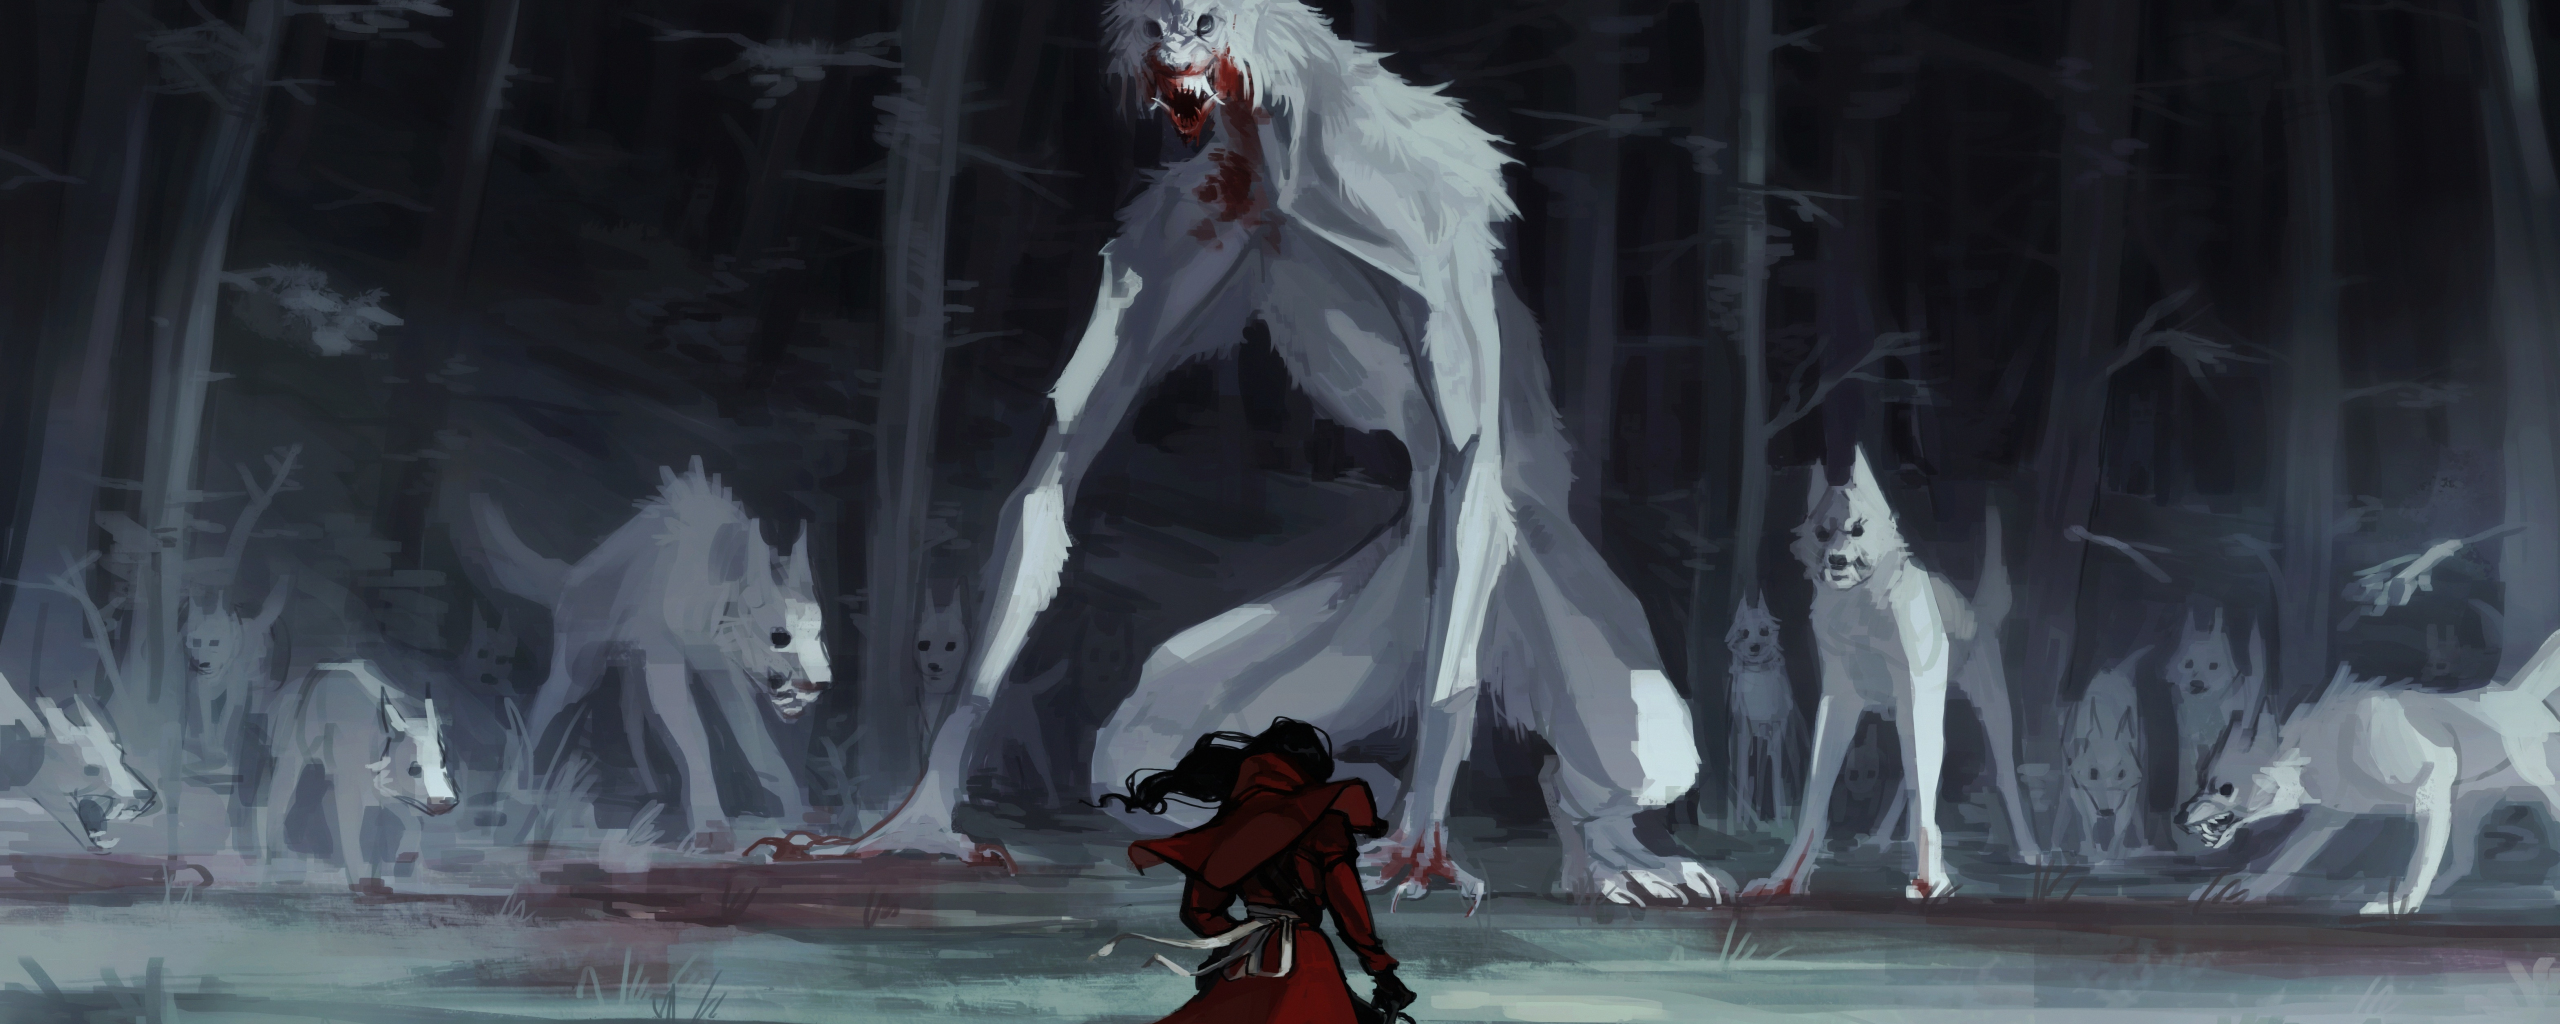 Red riding hood, wolf, fantasy, art, 2560x1024 wallpaper